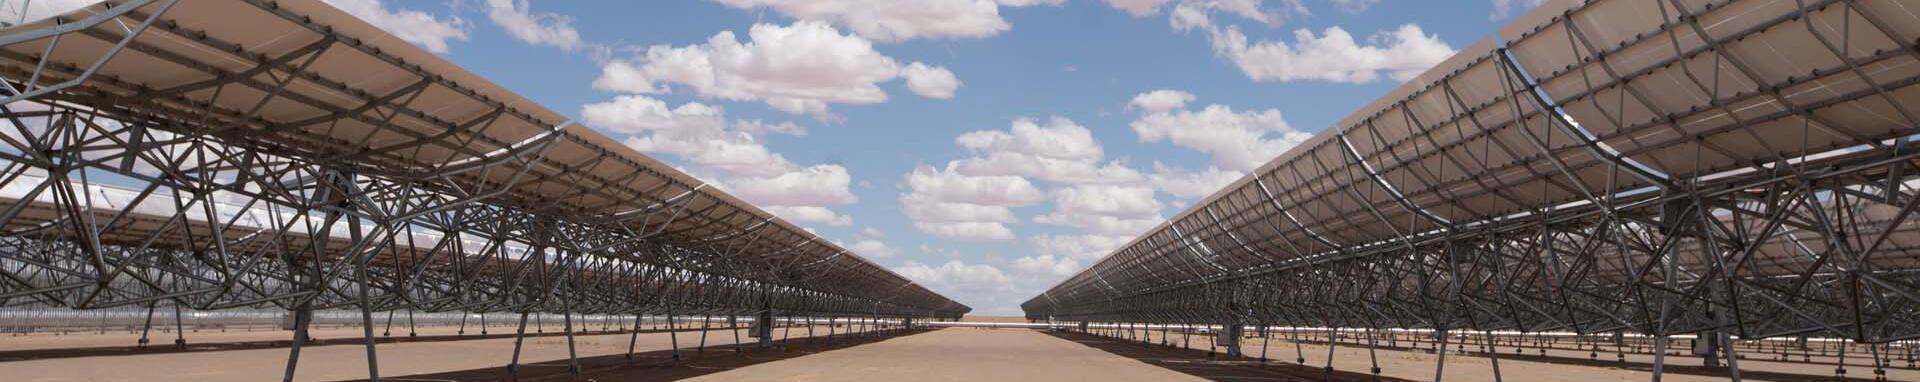 CIF Action Xina Solar One, Upington, South Africa